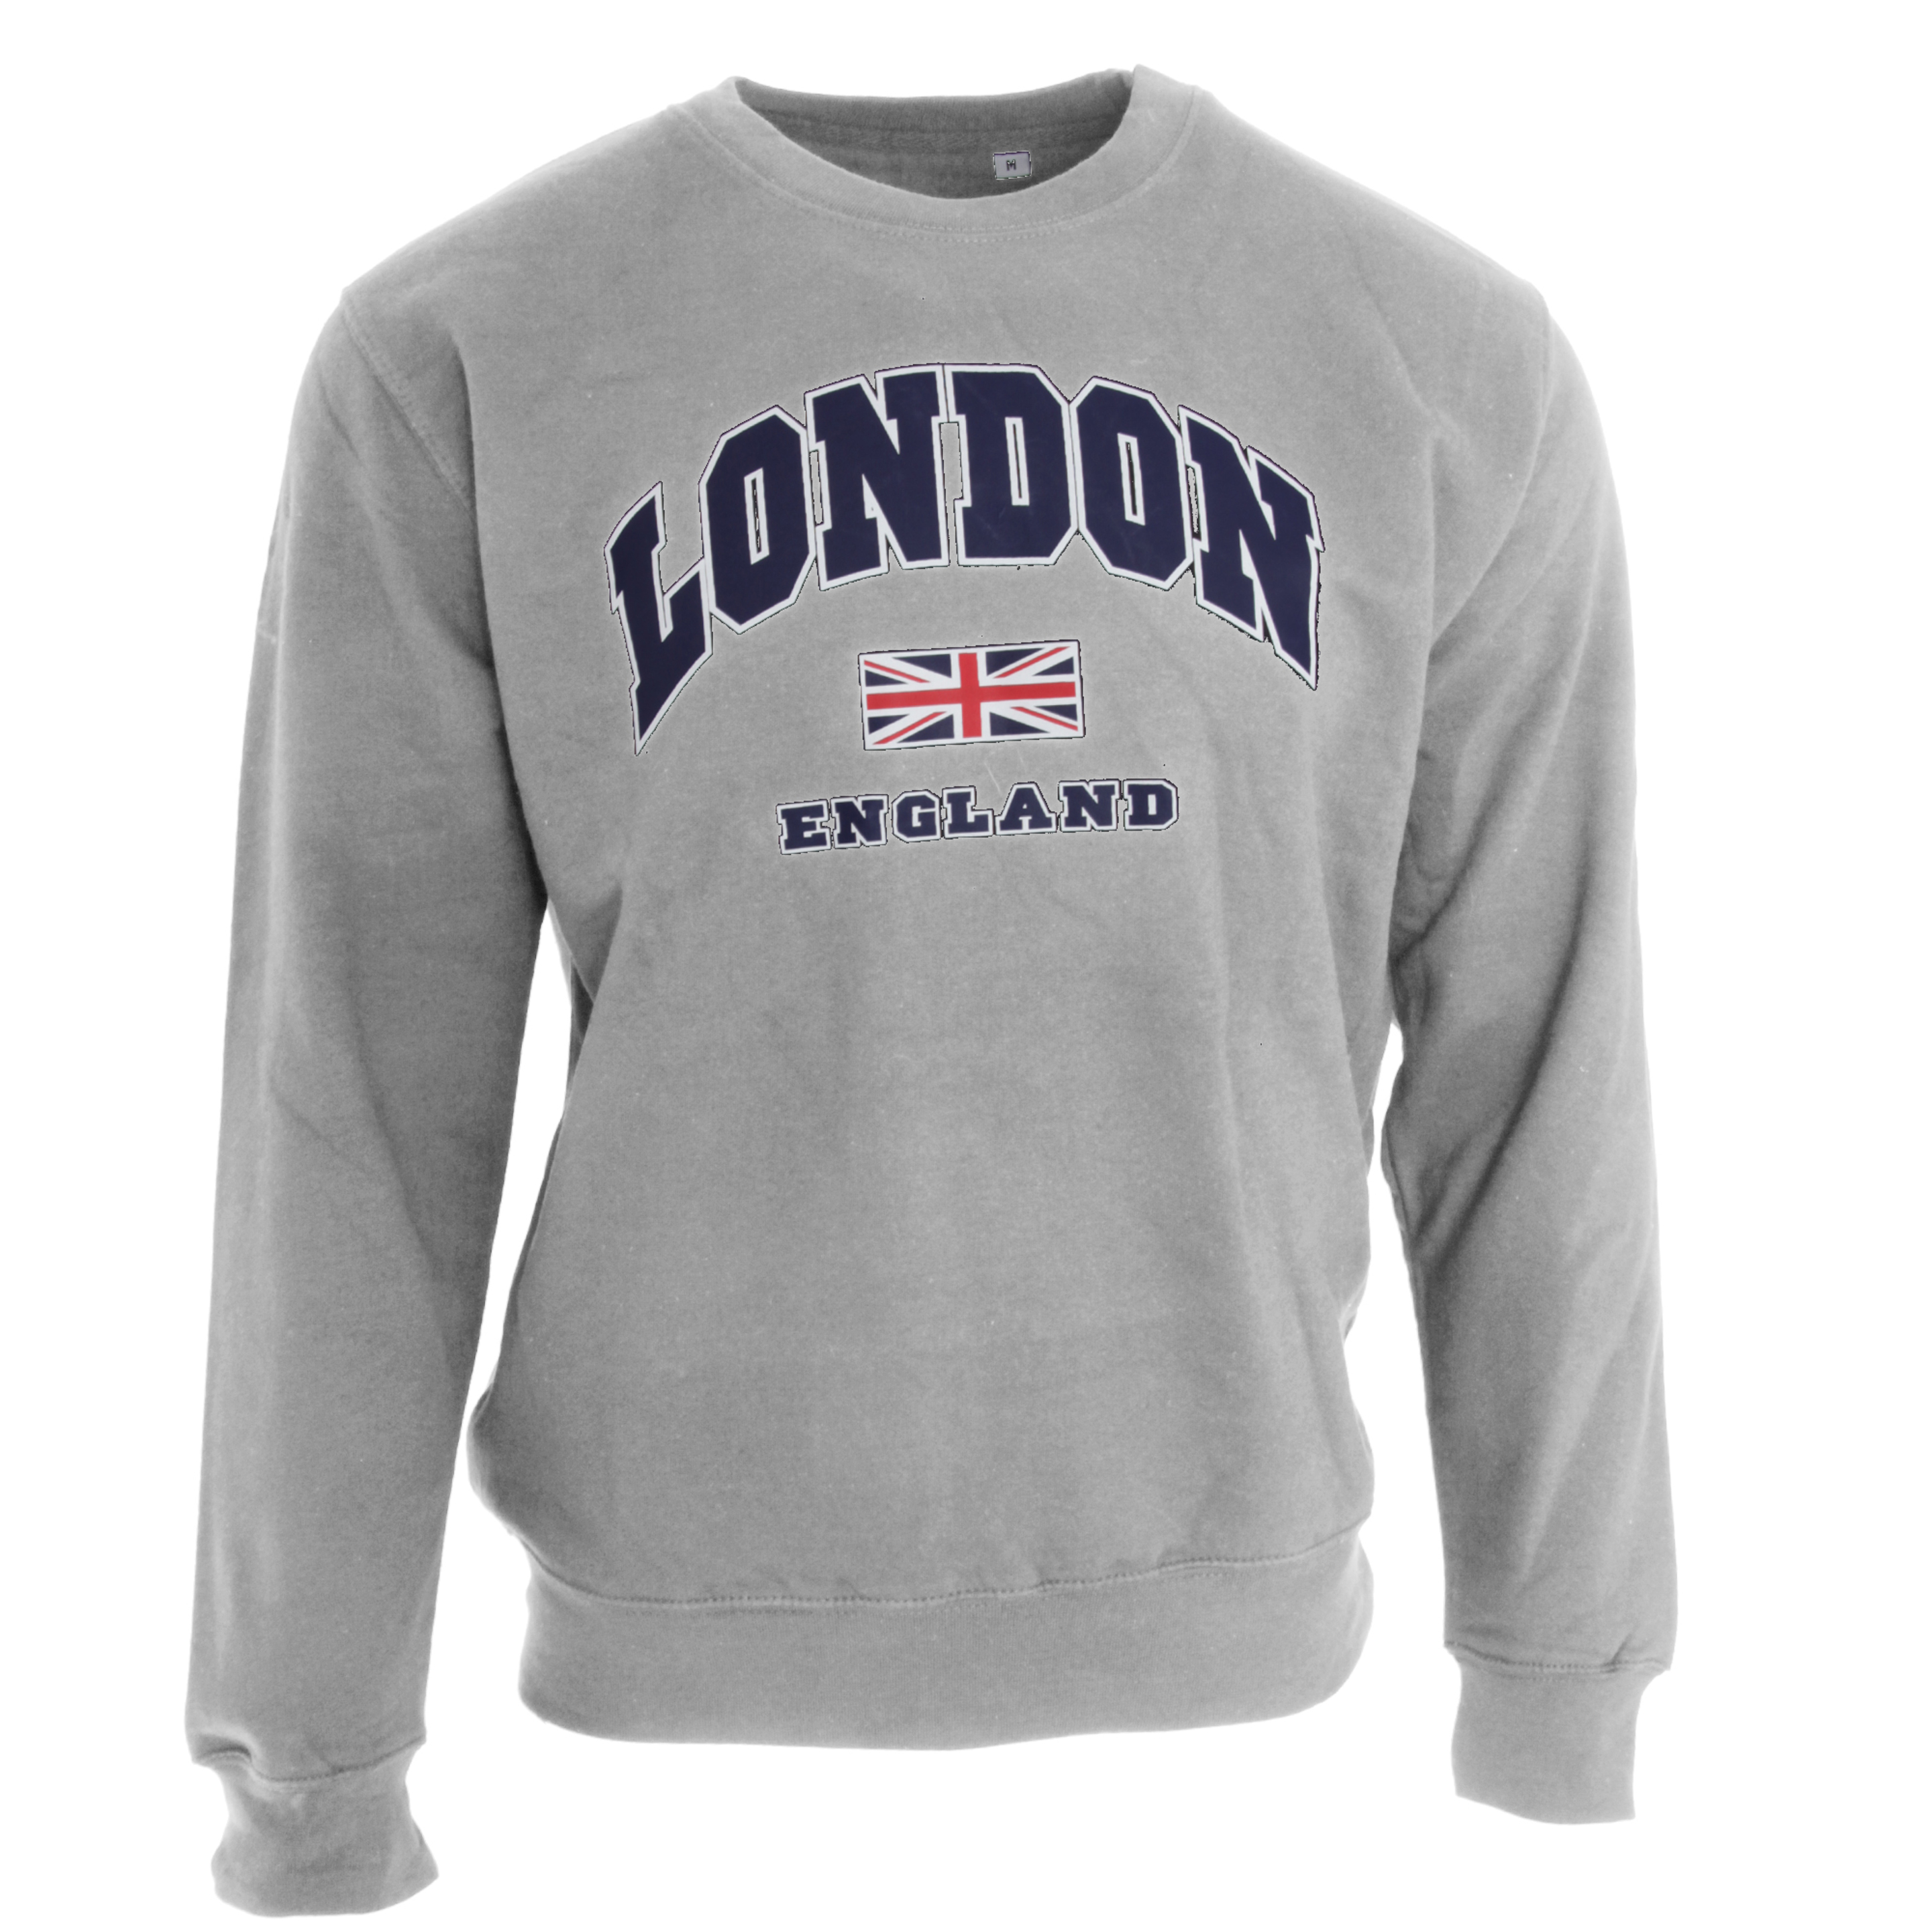 Jersey Con Diseño De Bandera Reino Unido Modelo London Uso Universal Textiles - gris - 